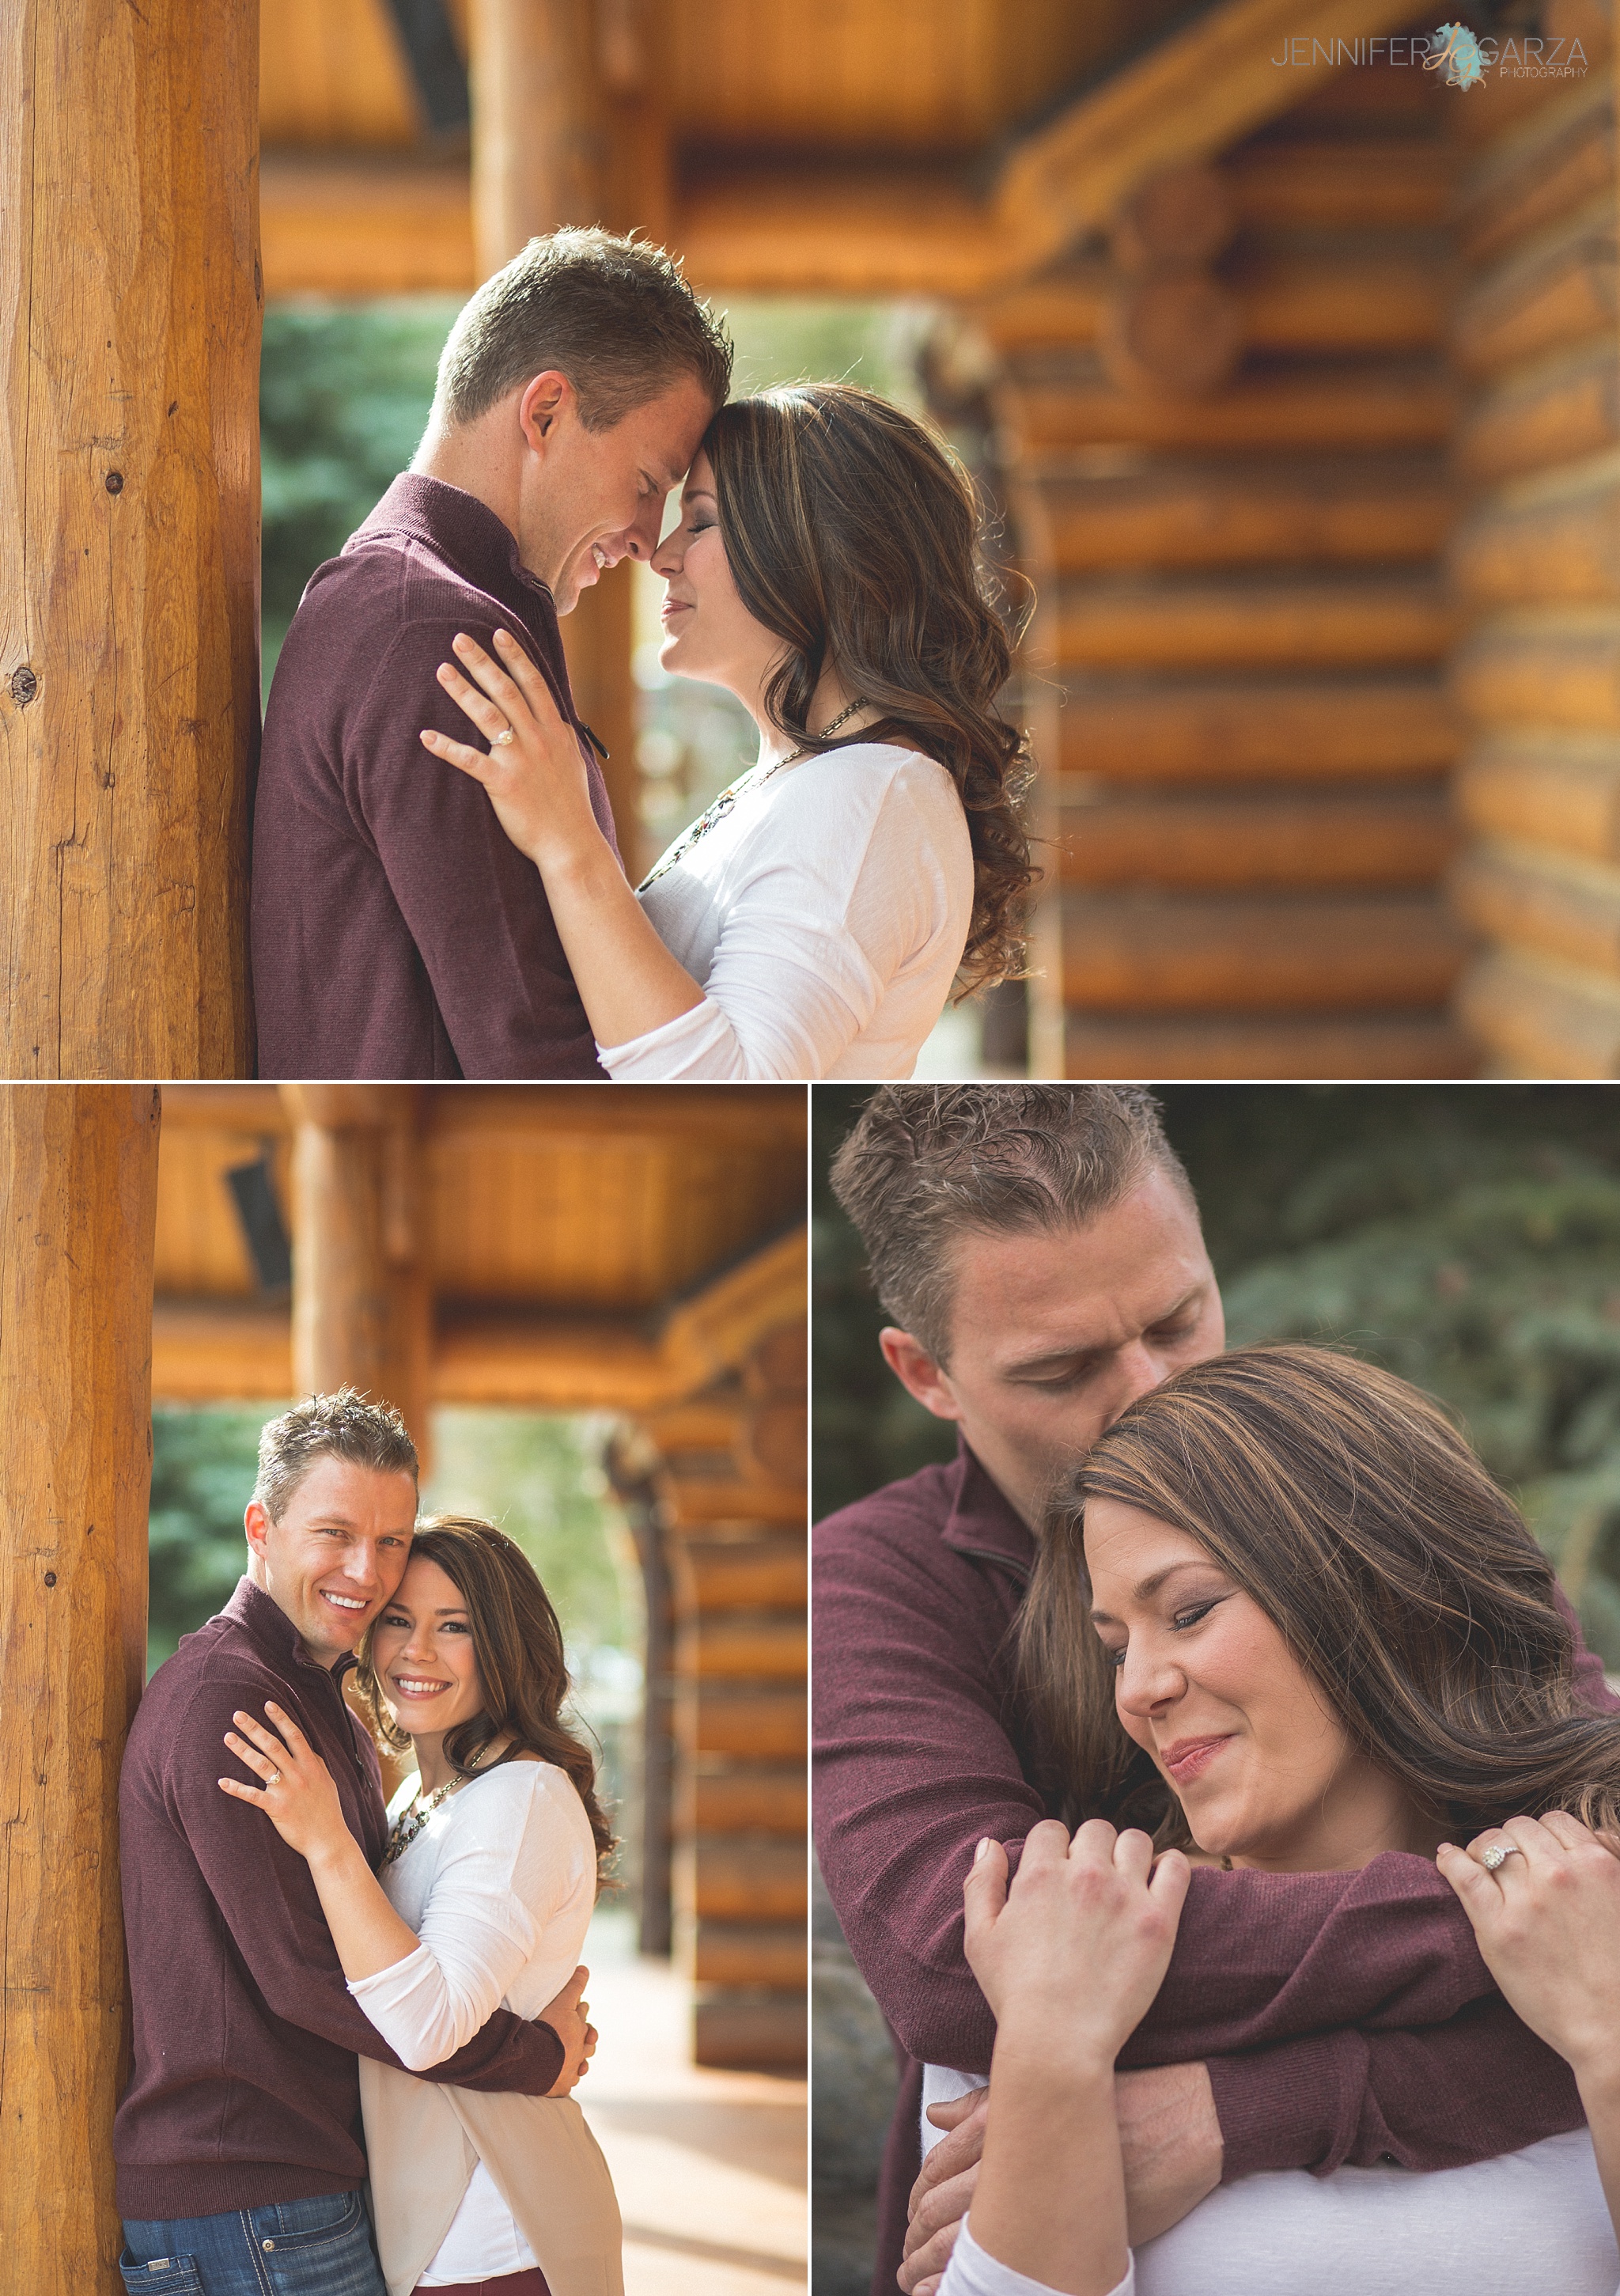 Jessica & Jeremy's Epic Engagement Shoot at Evergreen Lake House.